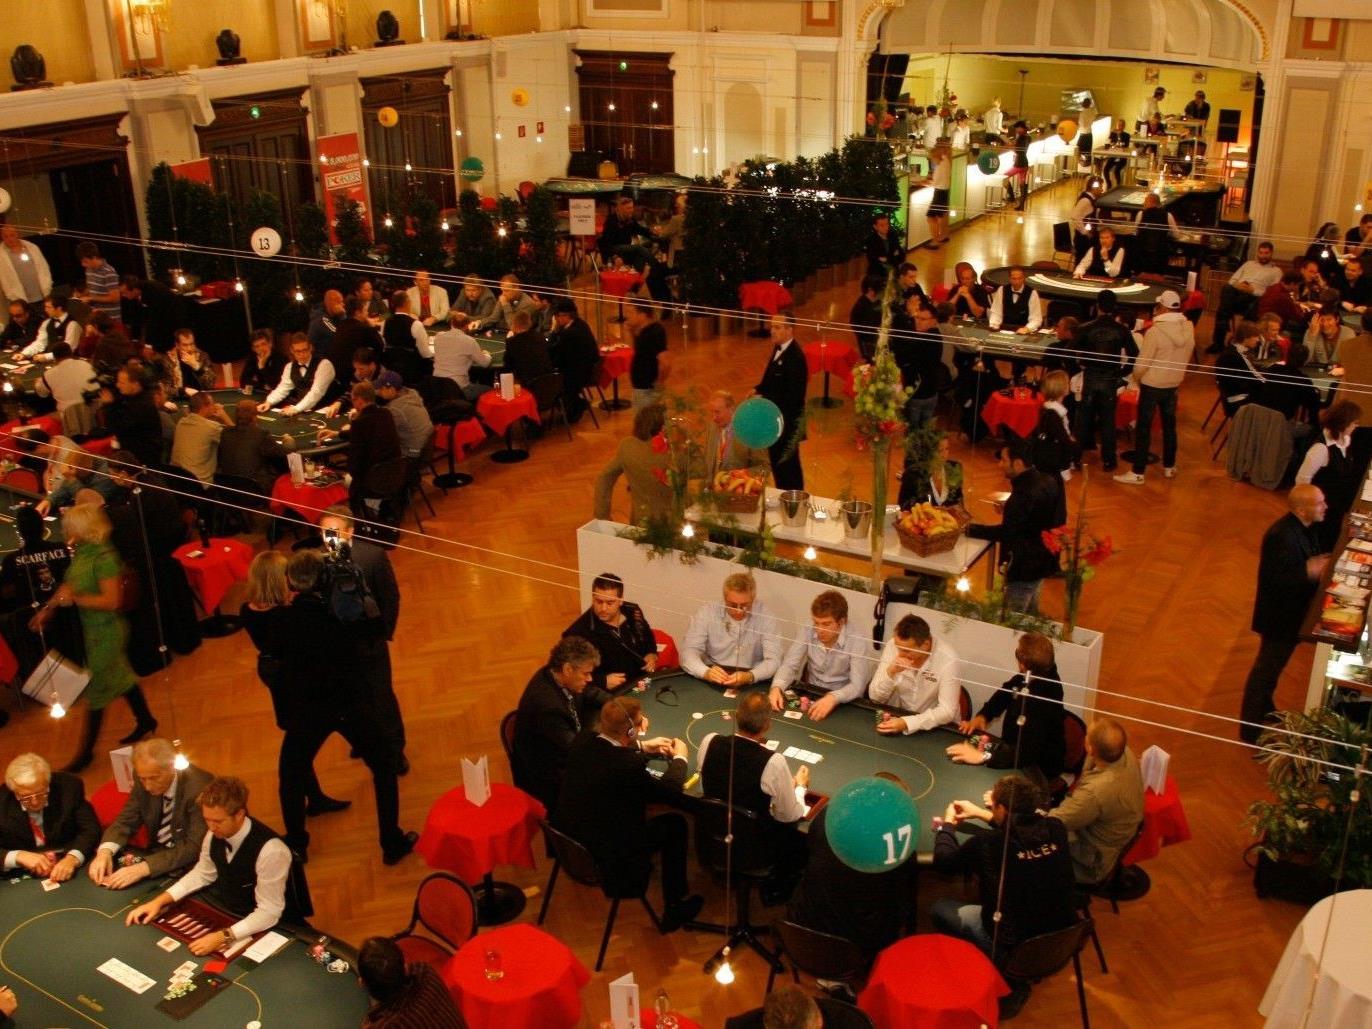 Am 25. Oktober 2012 startet die Poker-Europameisterschaft.